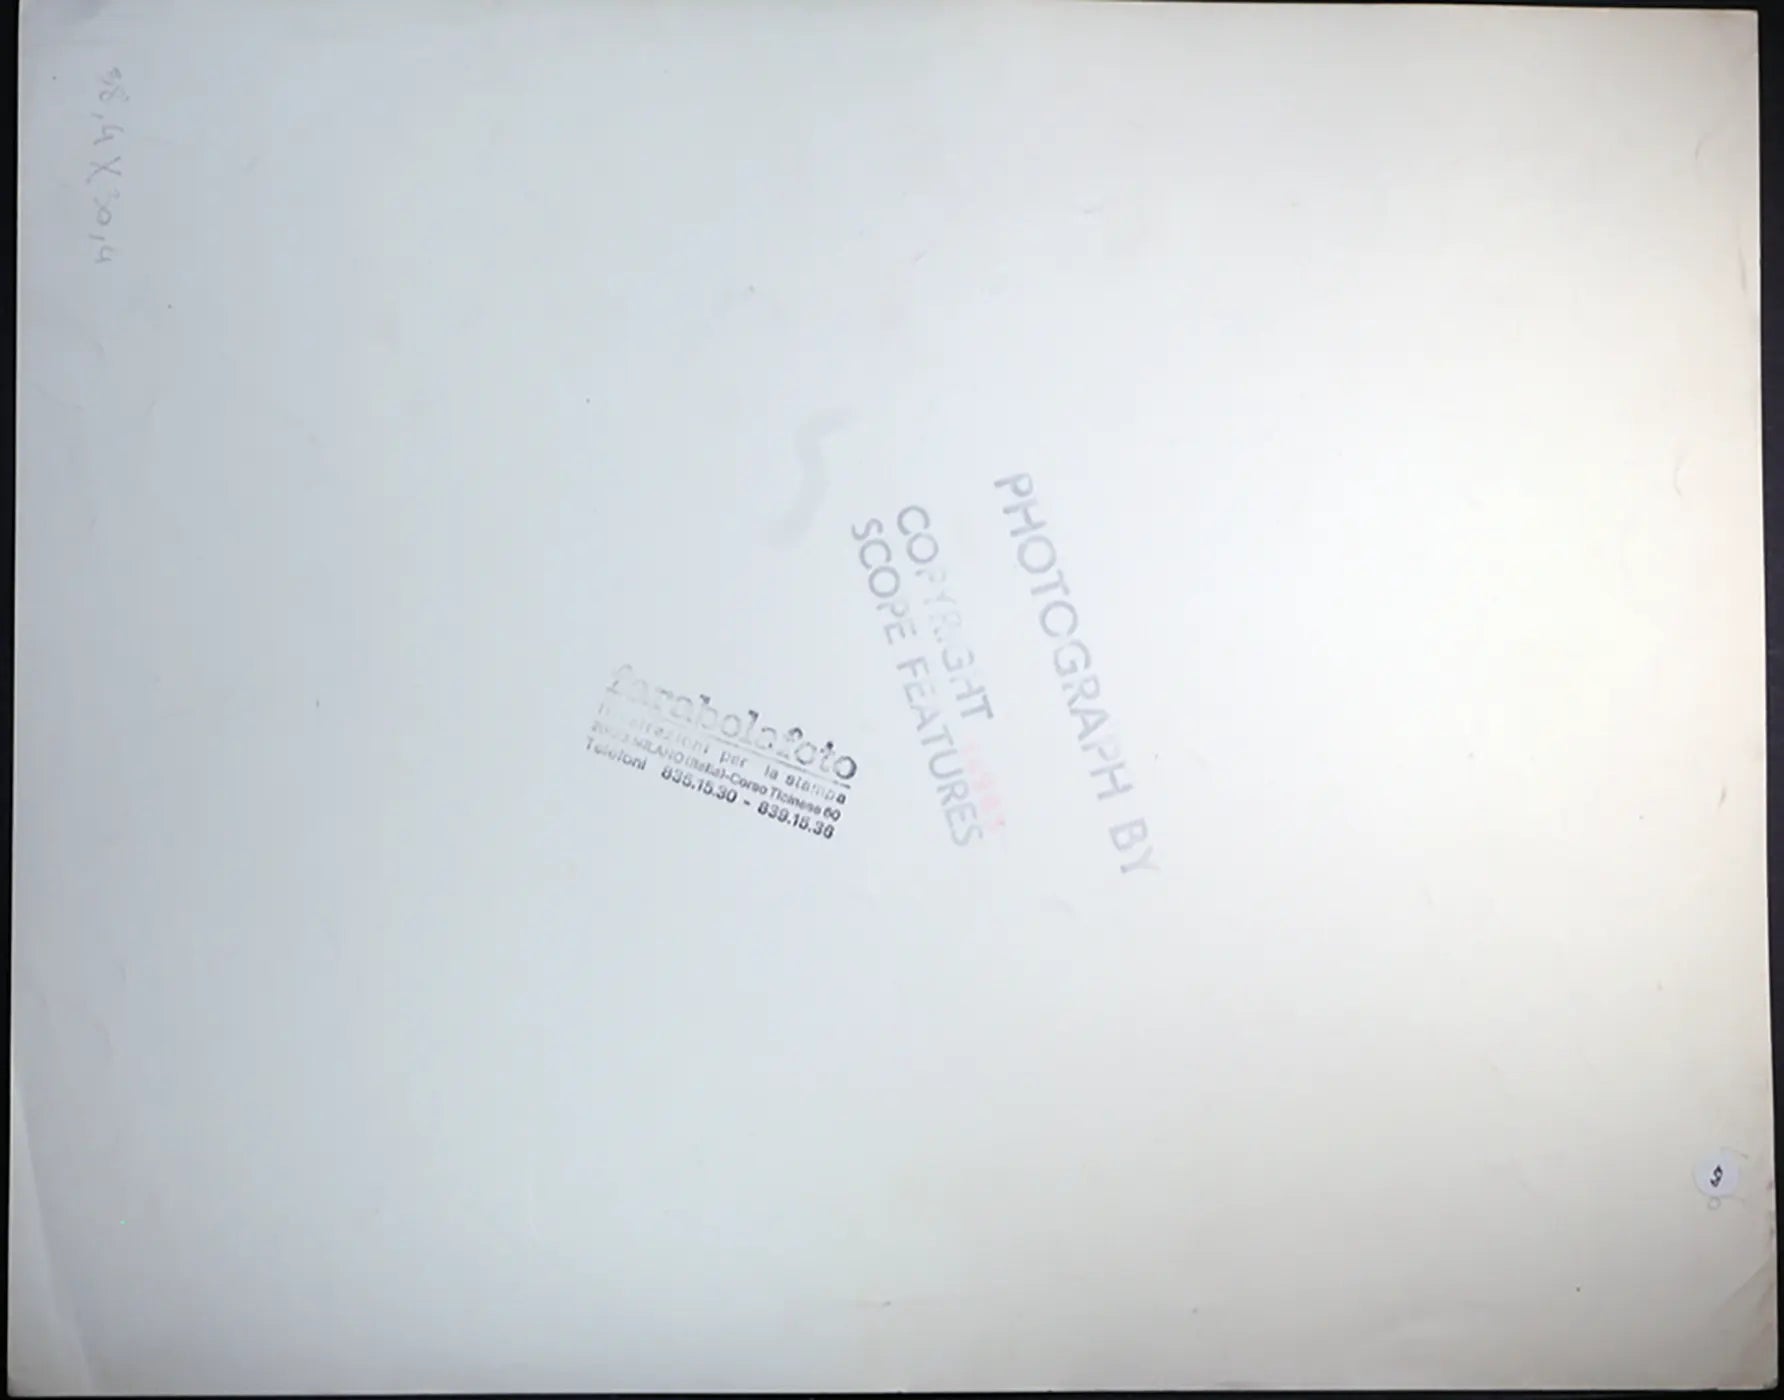 Cane beagle Ft 479 - Stampa 27x37 cm - Farabola Stampa ai sali d'argento